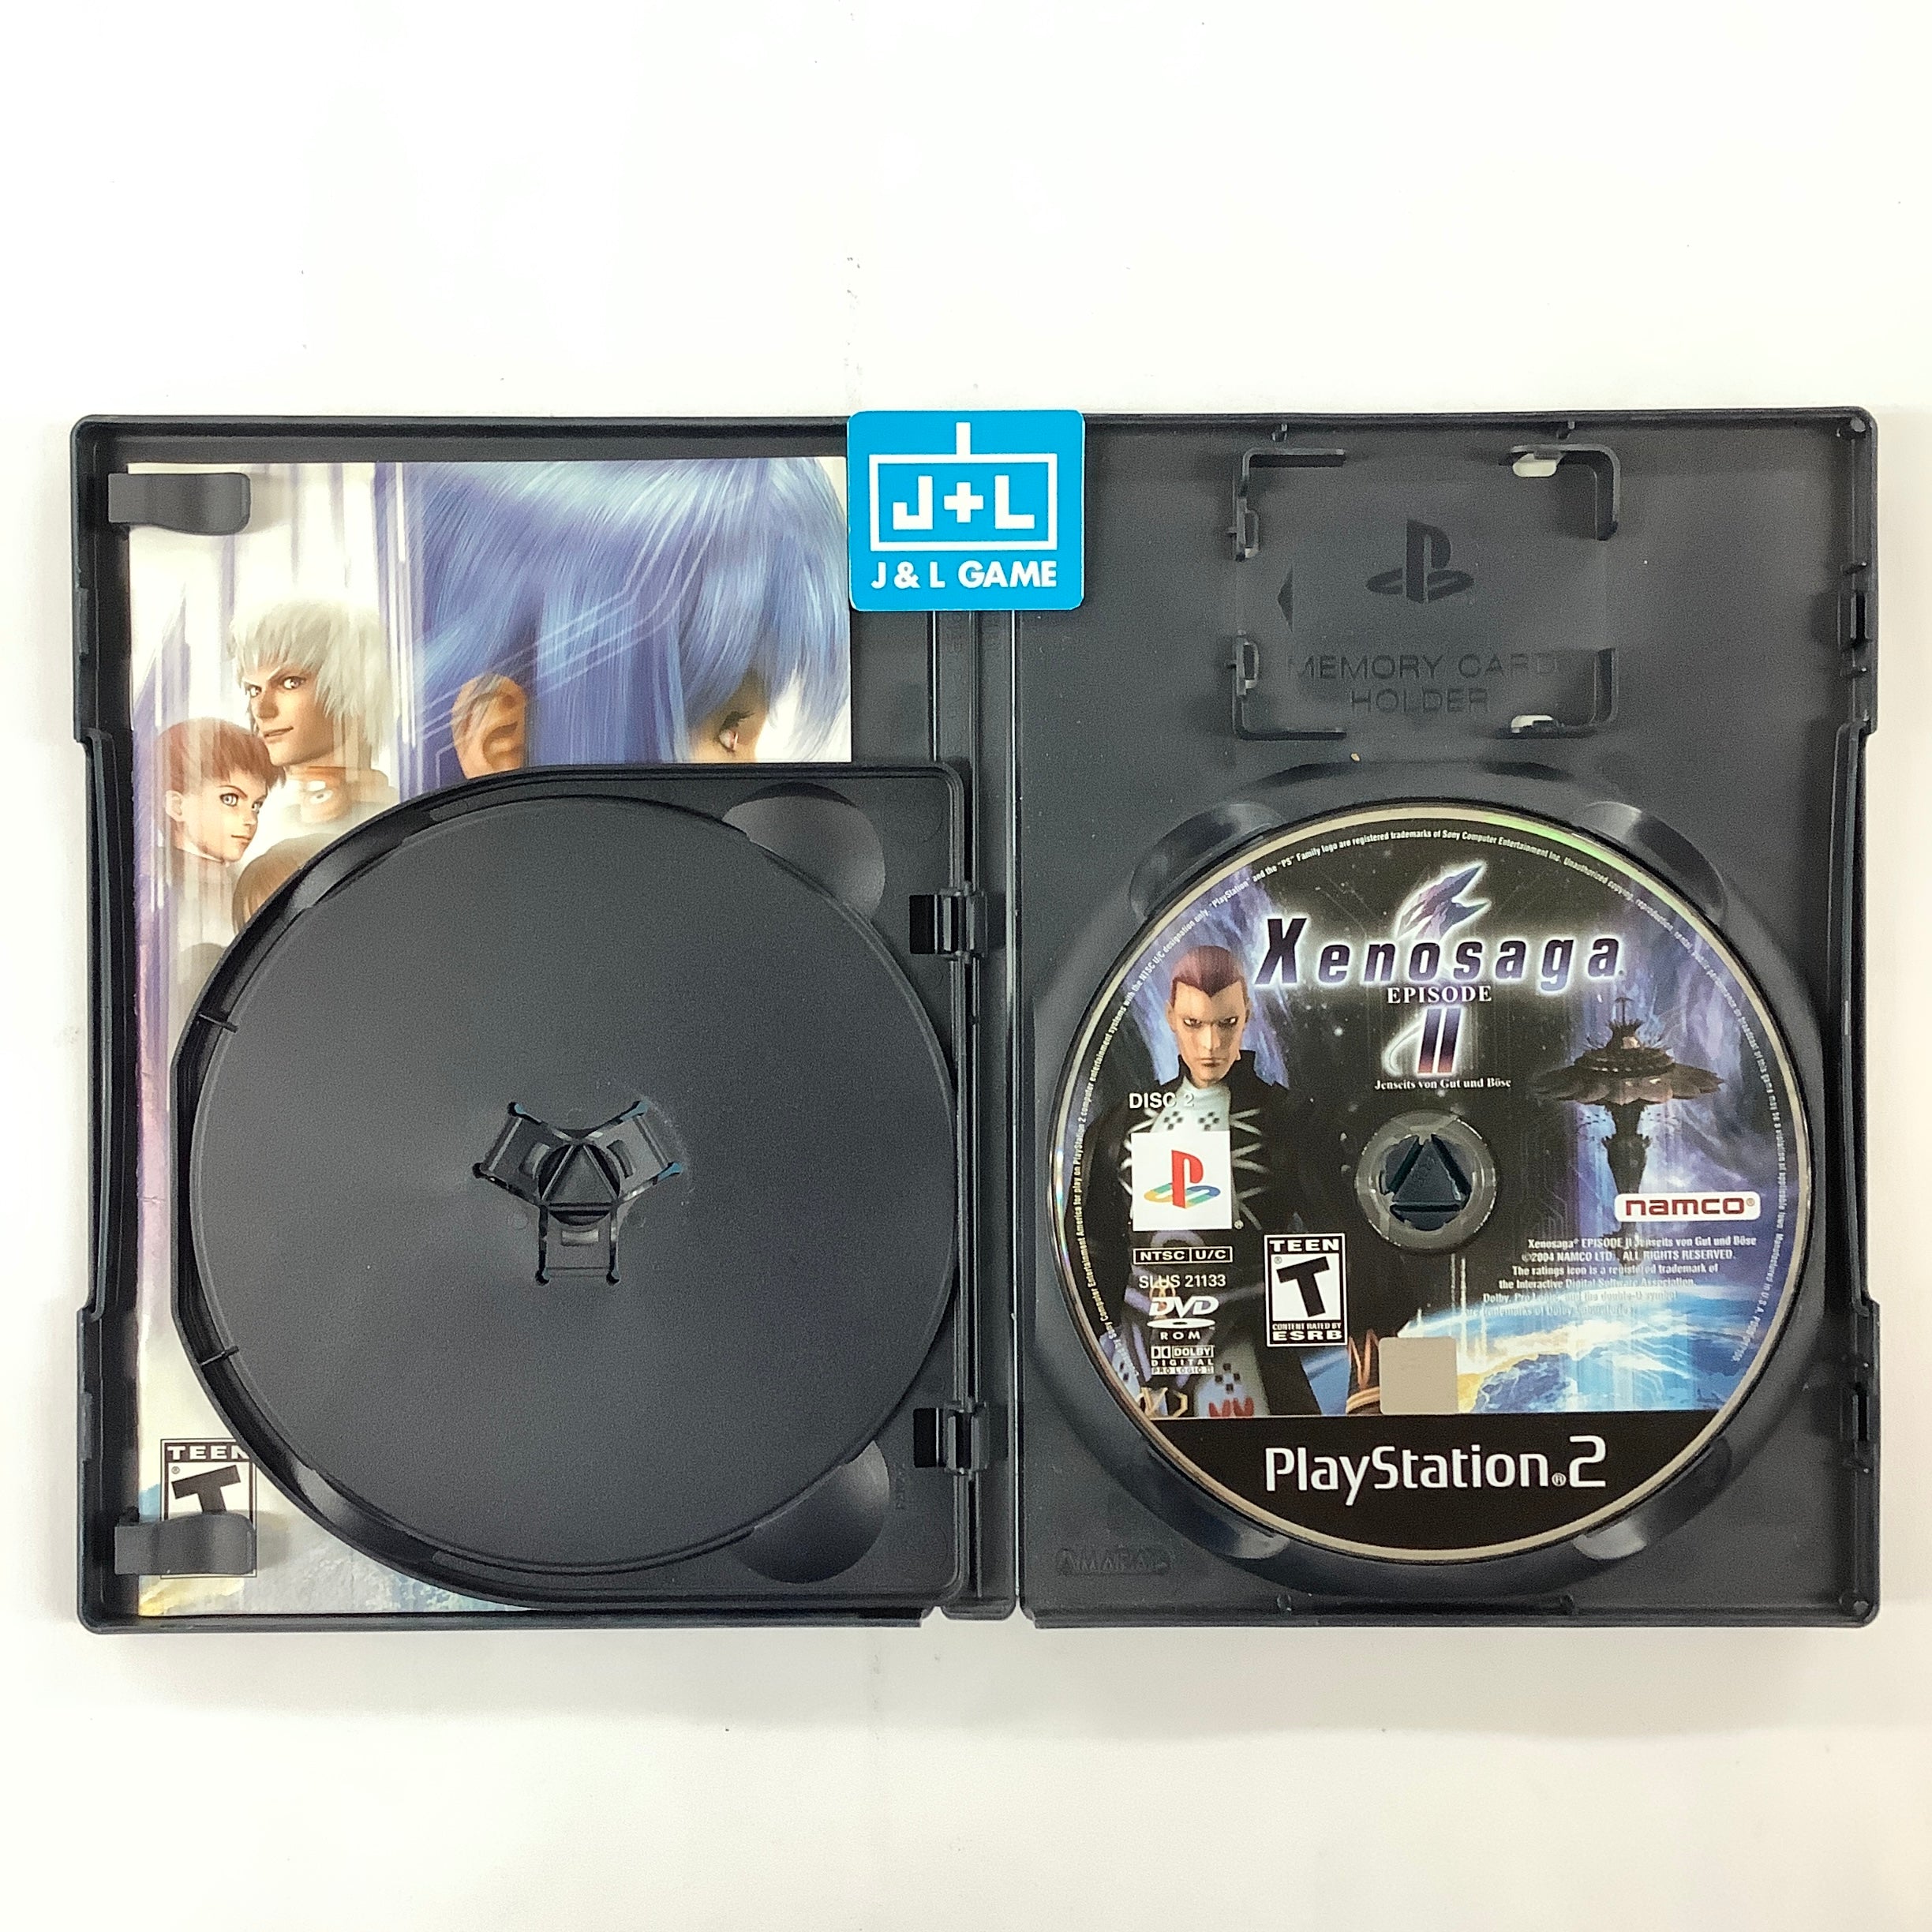 Xenosaga Episode II: Jenseits Von Gut und Bose - (PS2) PlayStation 2 [Pre-Owned] Video Games BANDAI NAMCO Entertainment   